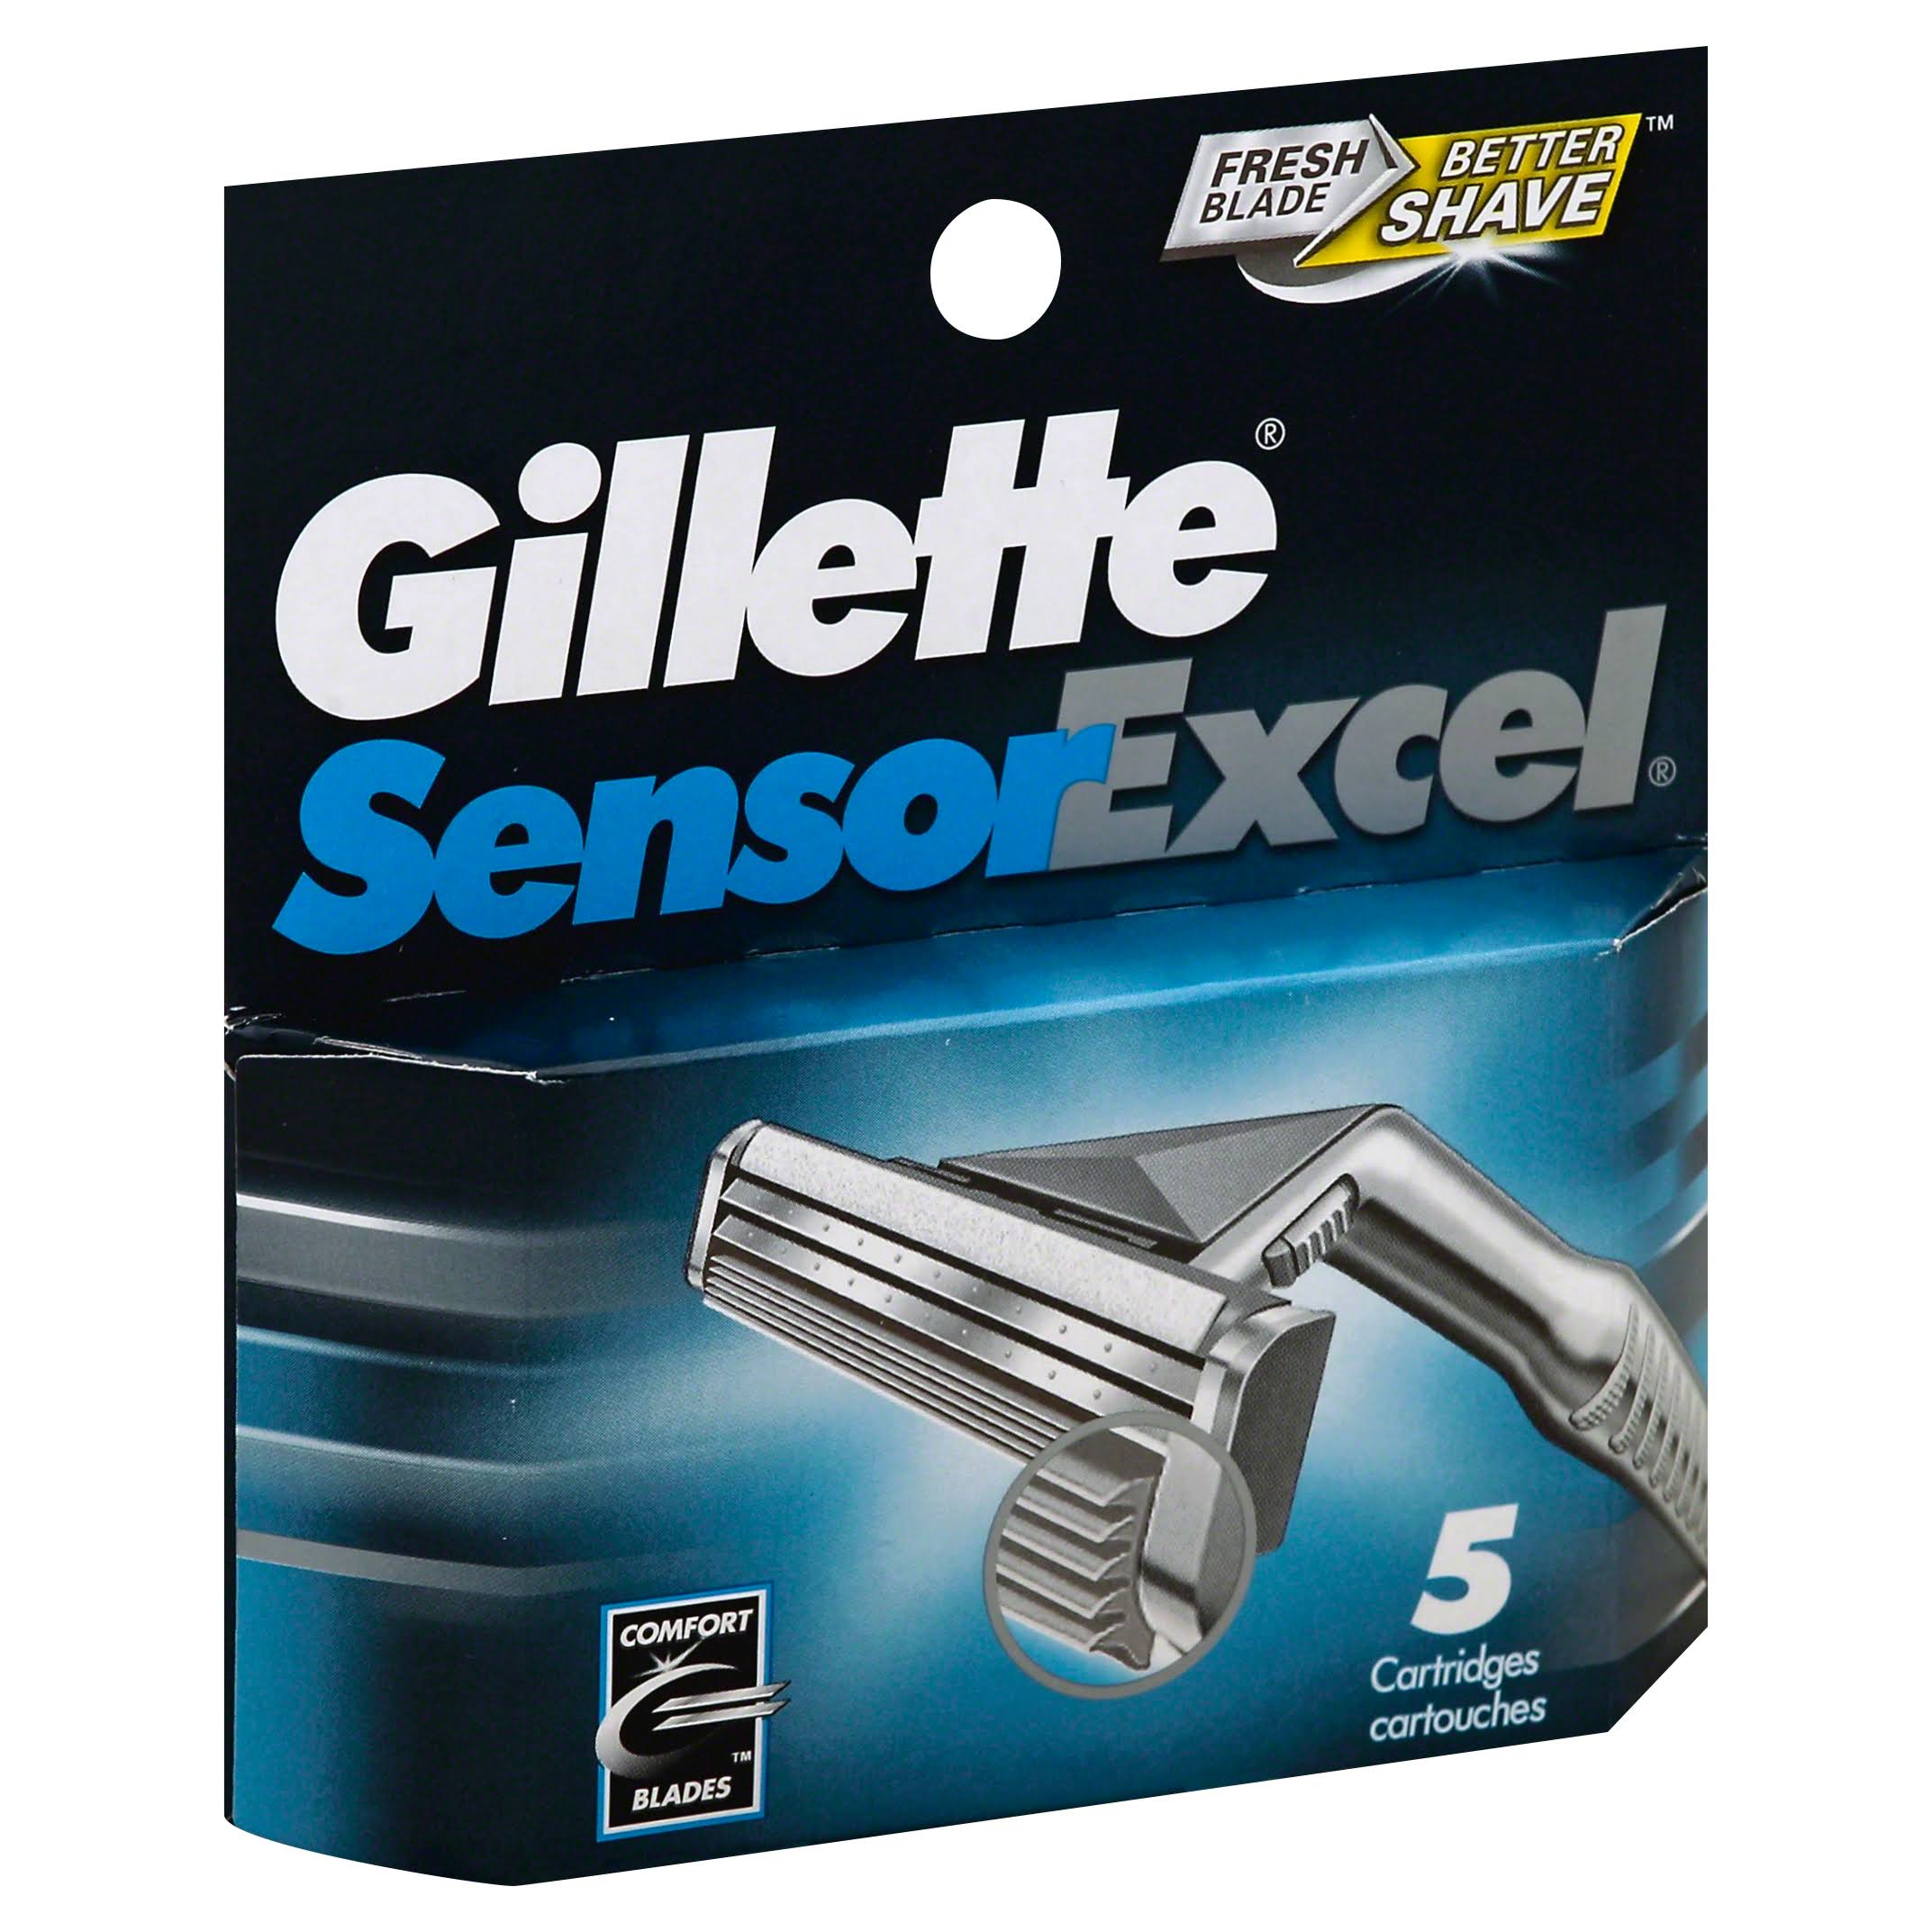 Gillette Sensor Excel Cartridges Razor Blade Refills - 5ct